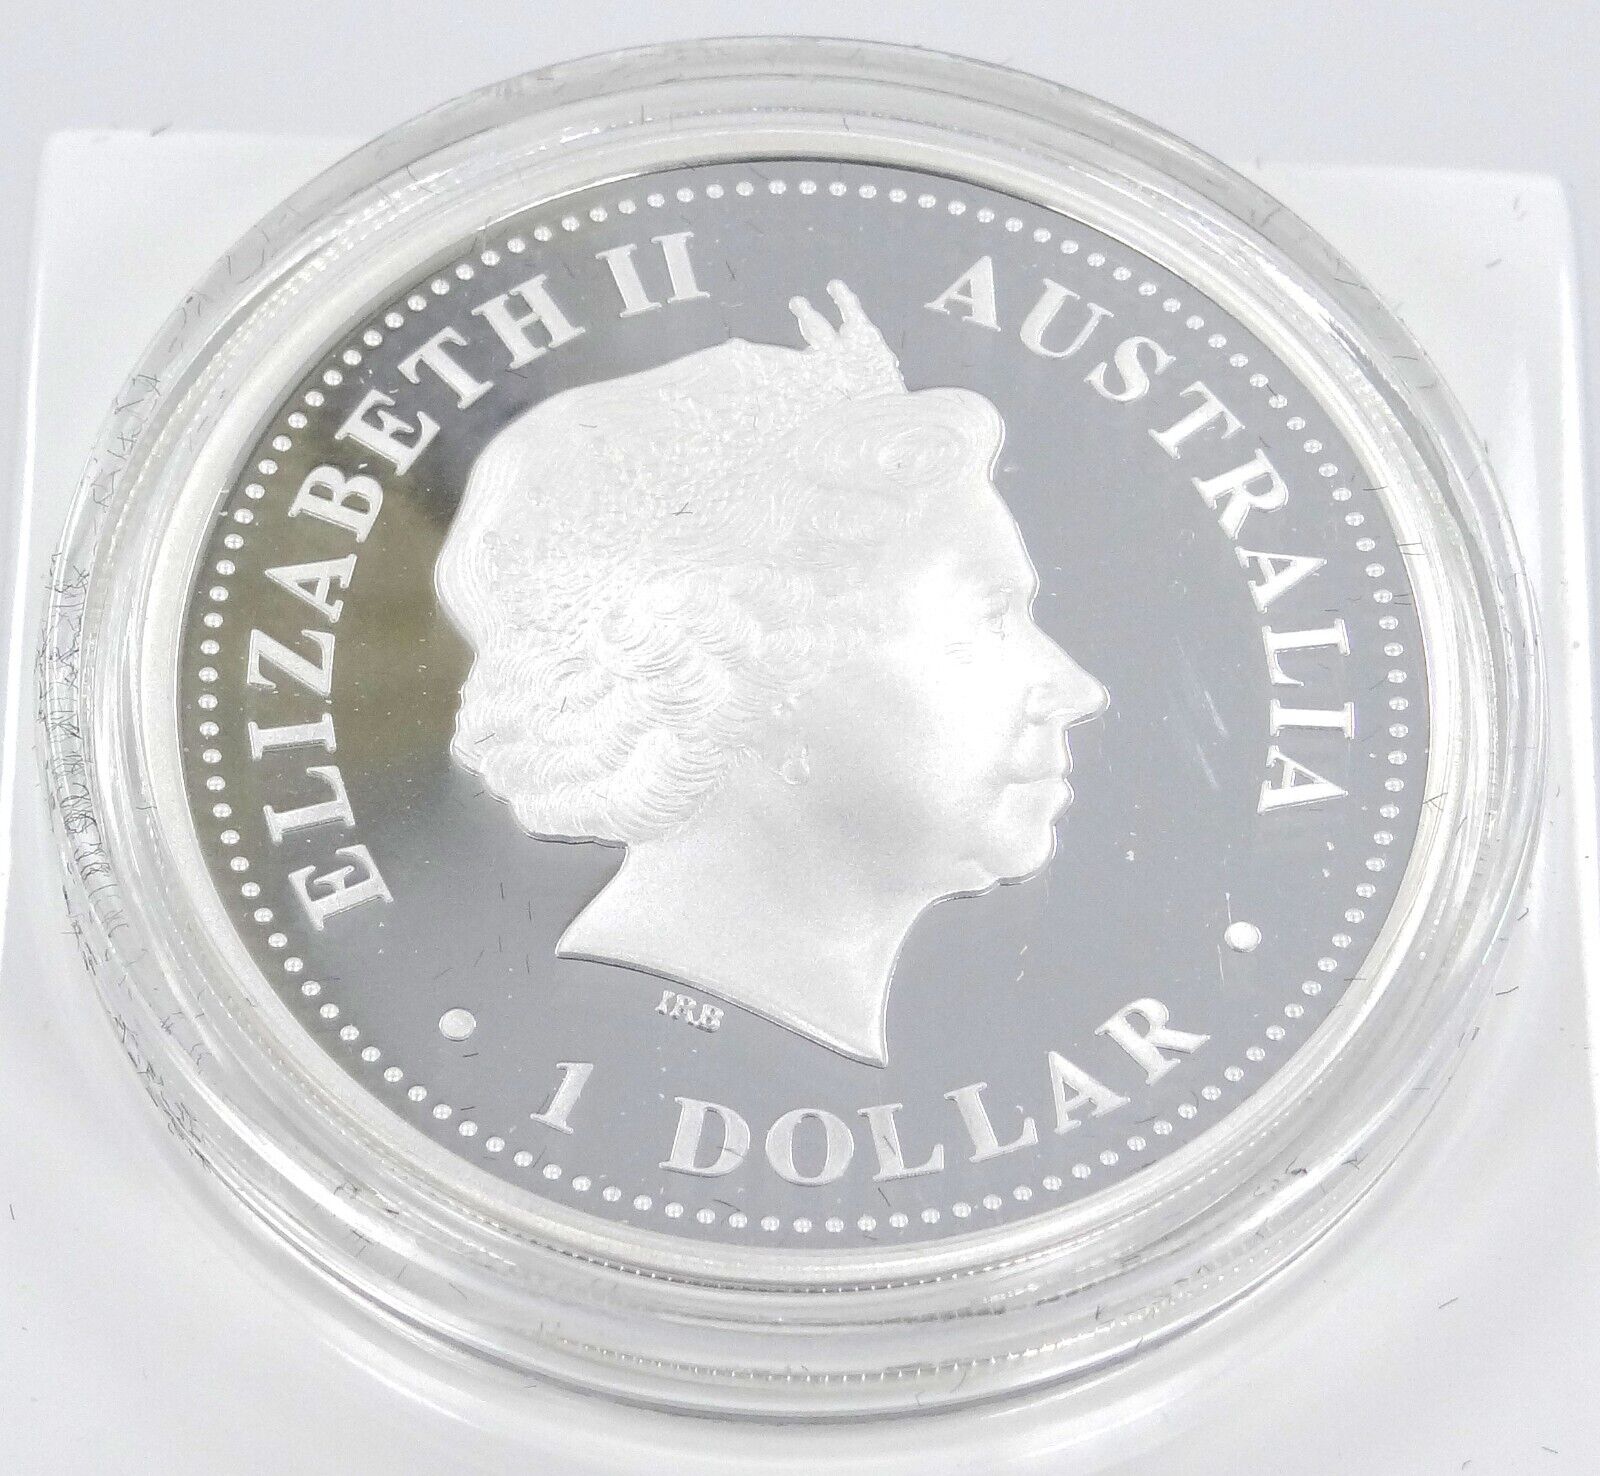 1 Oz Silver Coin 2006 $1 Australia Discover Australia Proof Coin - Canberra-classypw.com-1